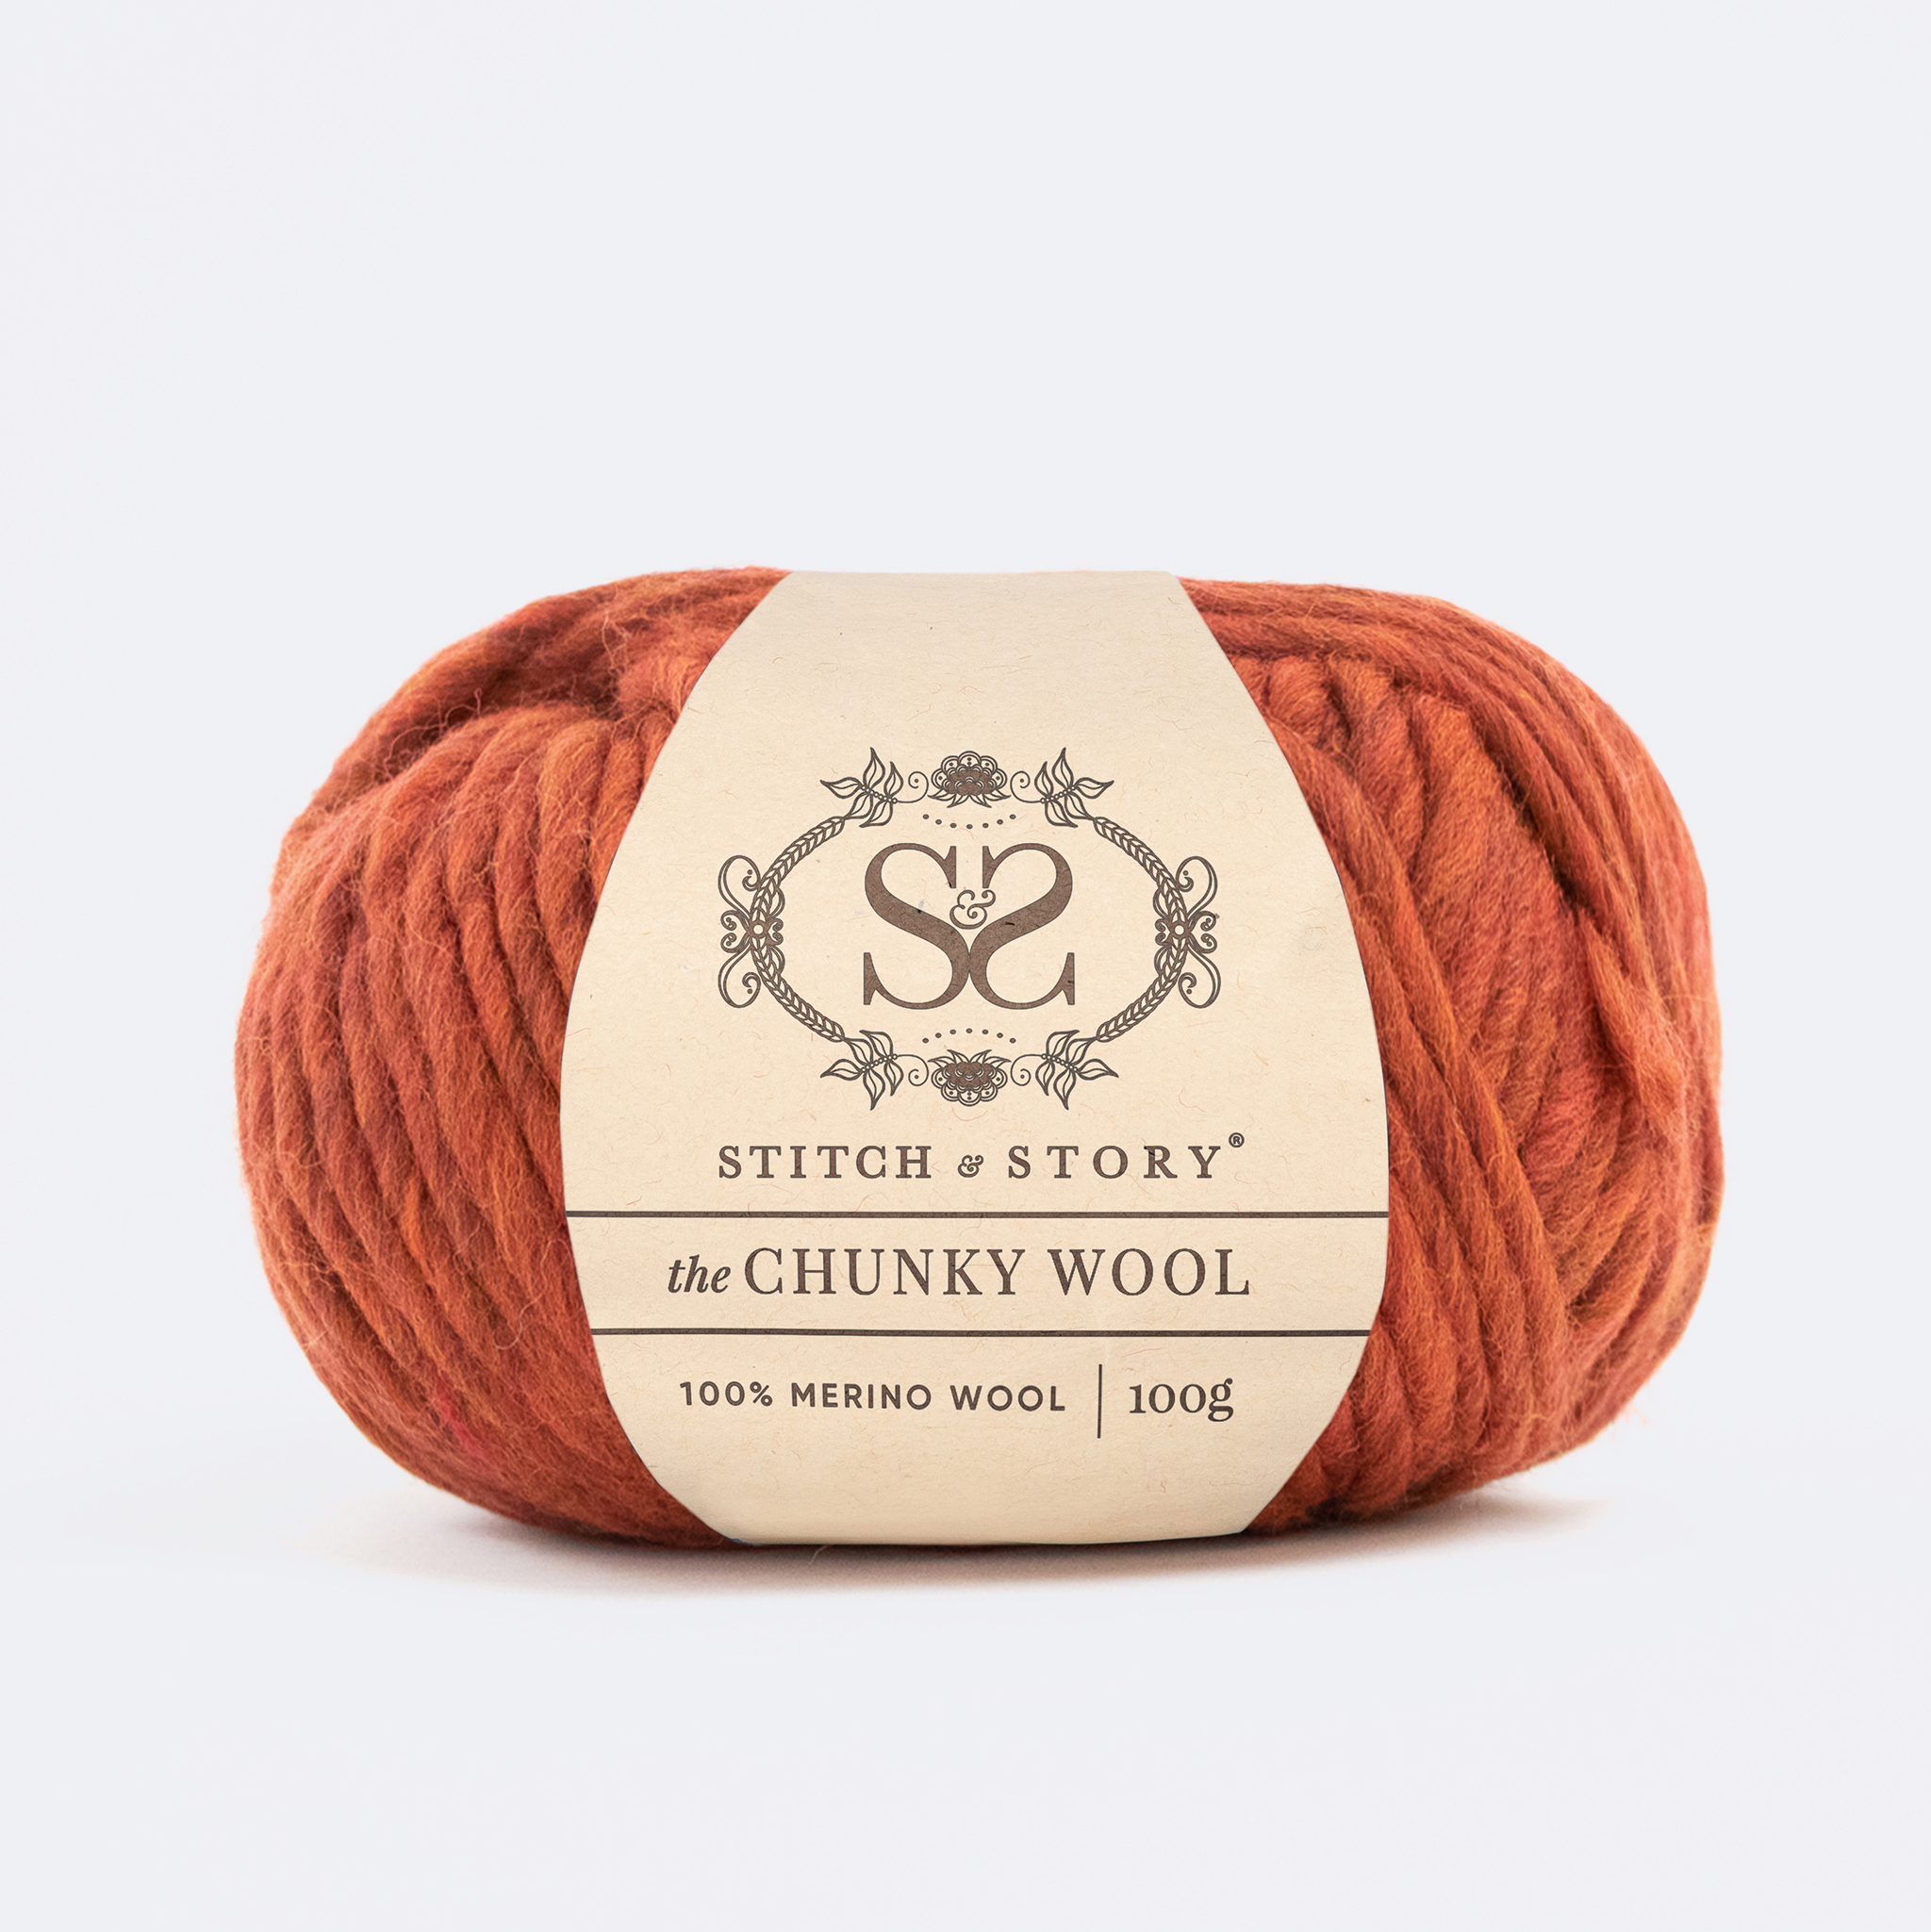 Knitting wool 6 x 100g acrylic yarn 8ply Multi Colour Grey Red Green Orange New 